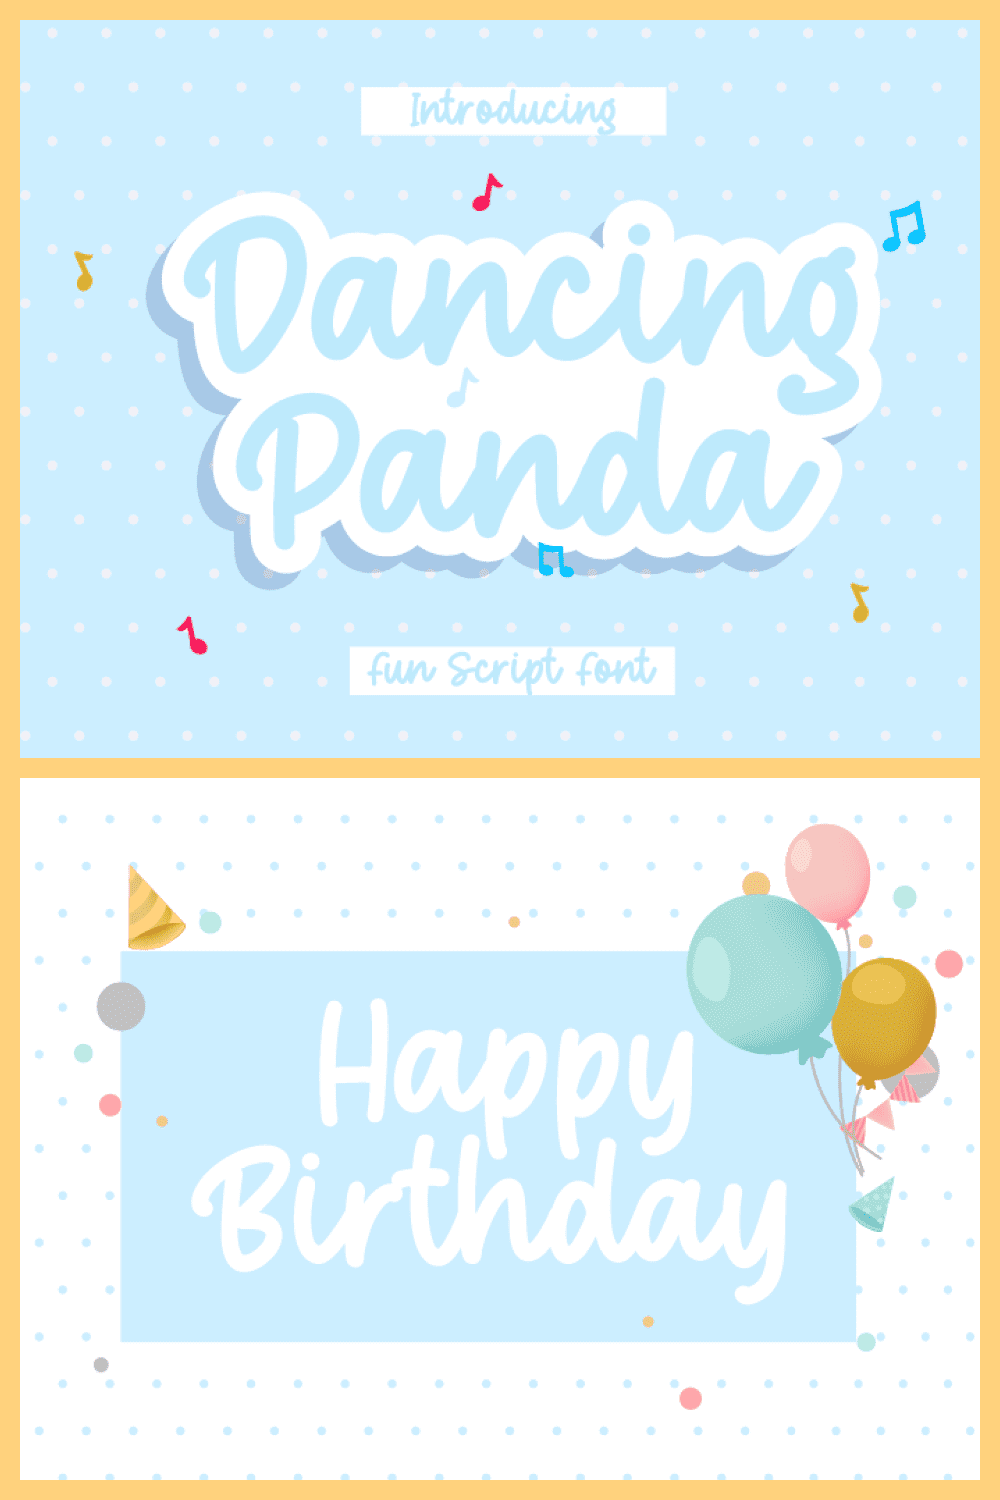 Dancing Panda a Fun Script Font - MasterBundles - Pinterest Collage Image.